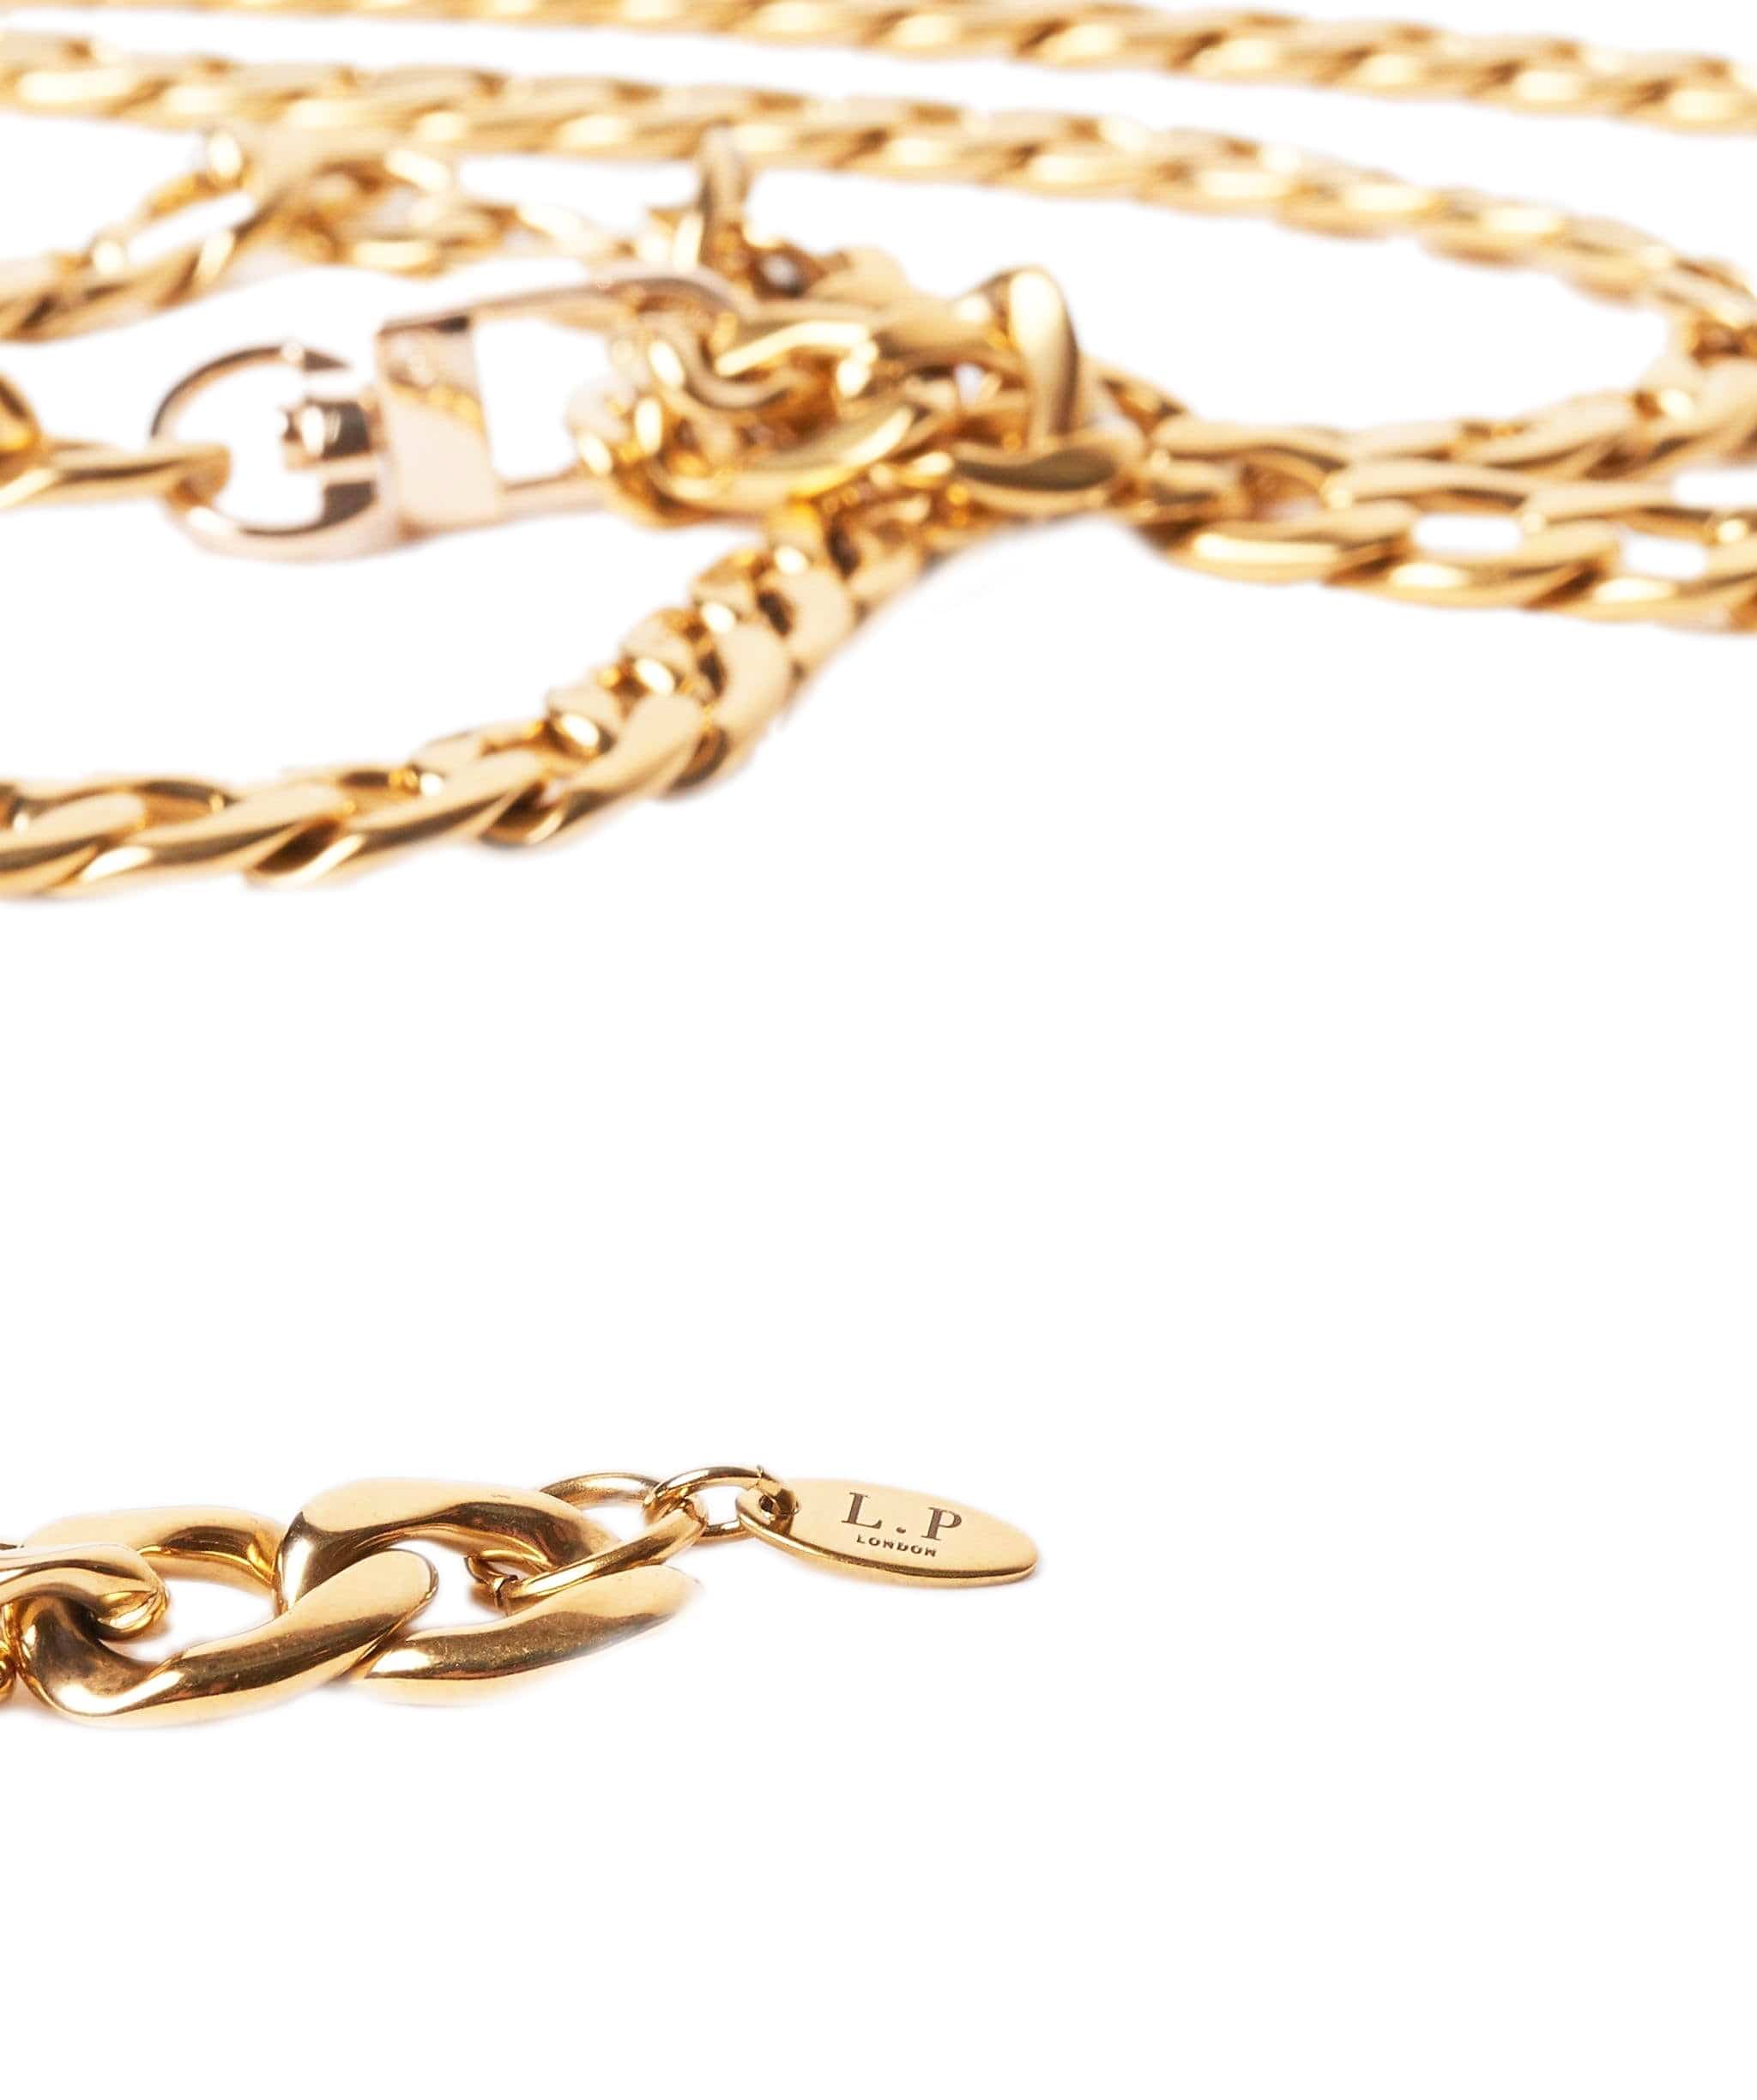 Luxury Promise Vintage Unbranded Gold Chain Belt - OL1020